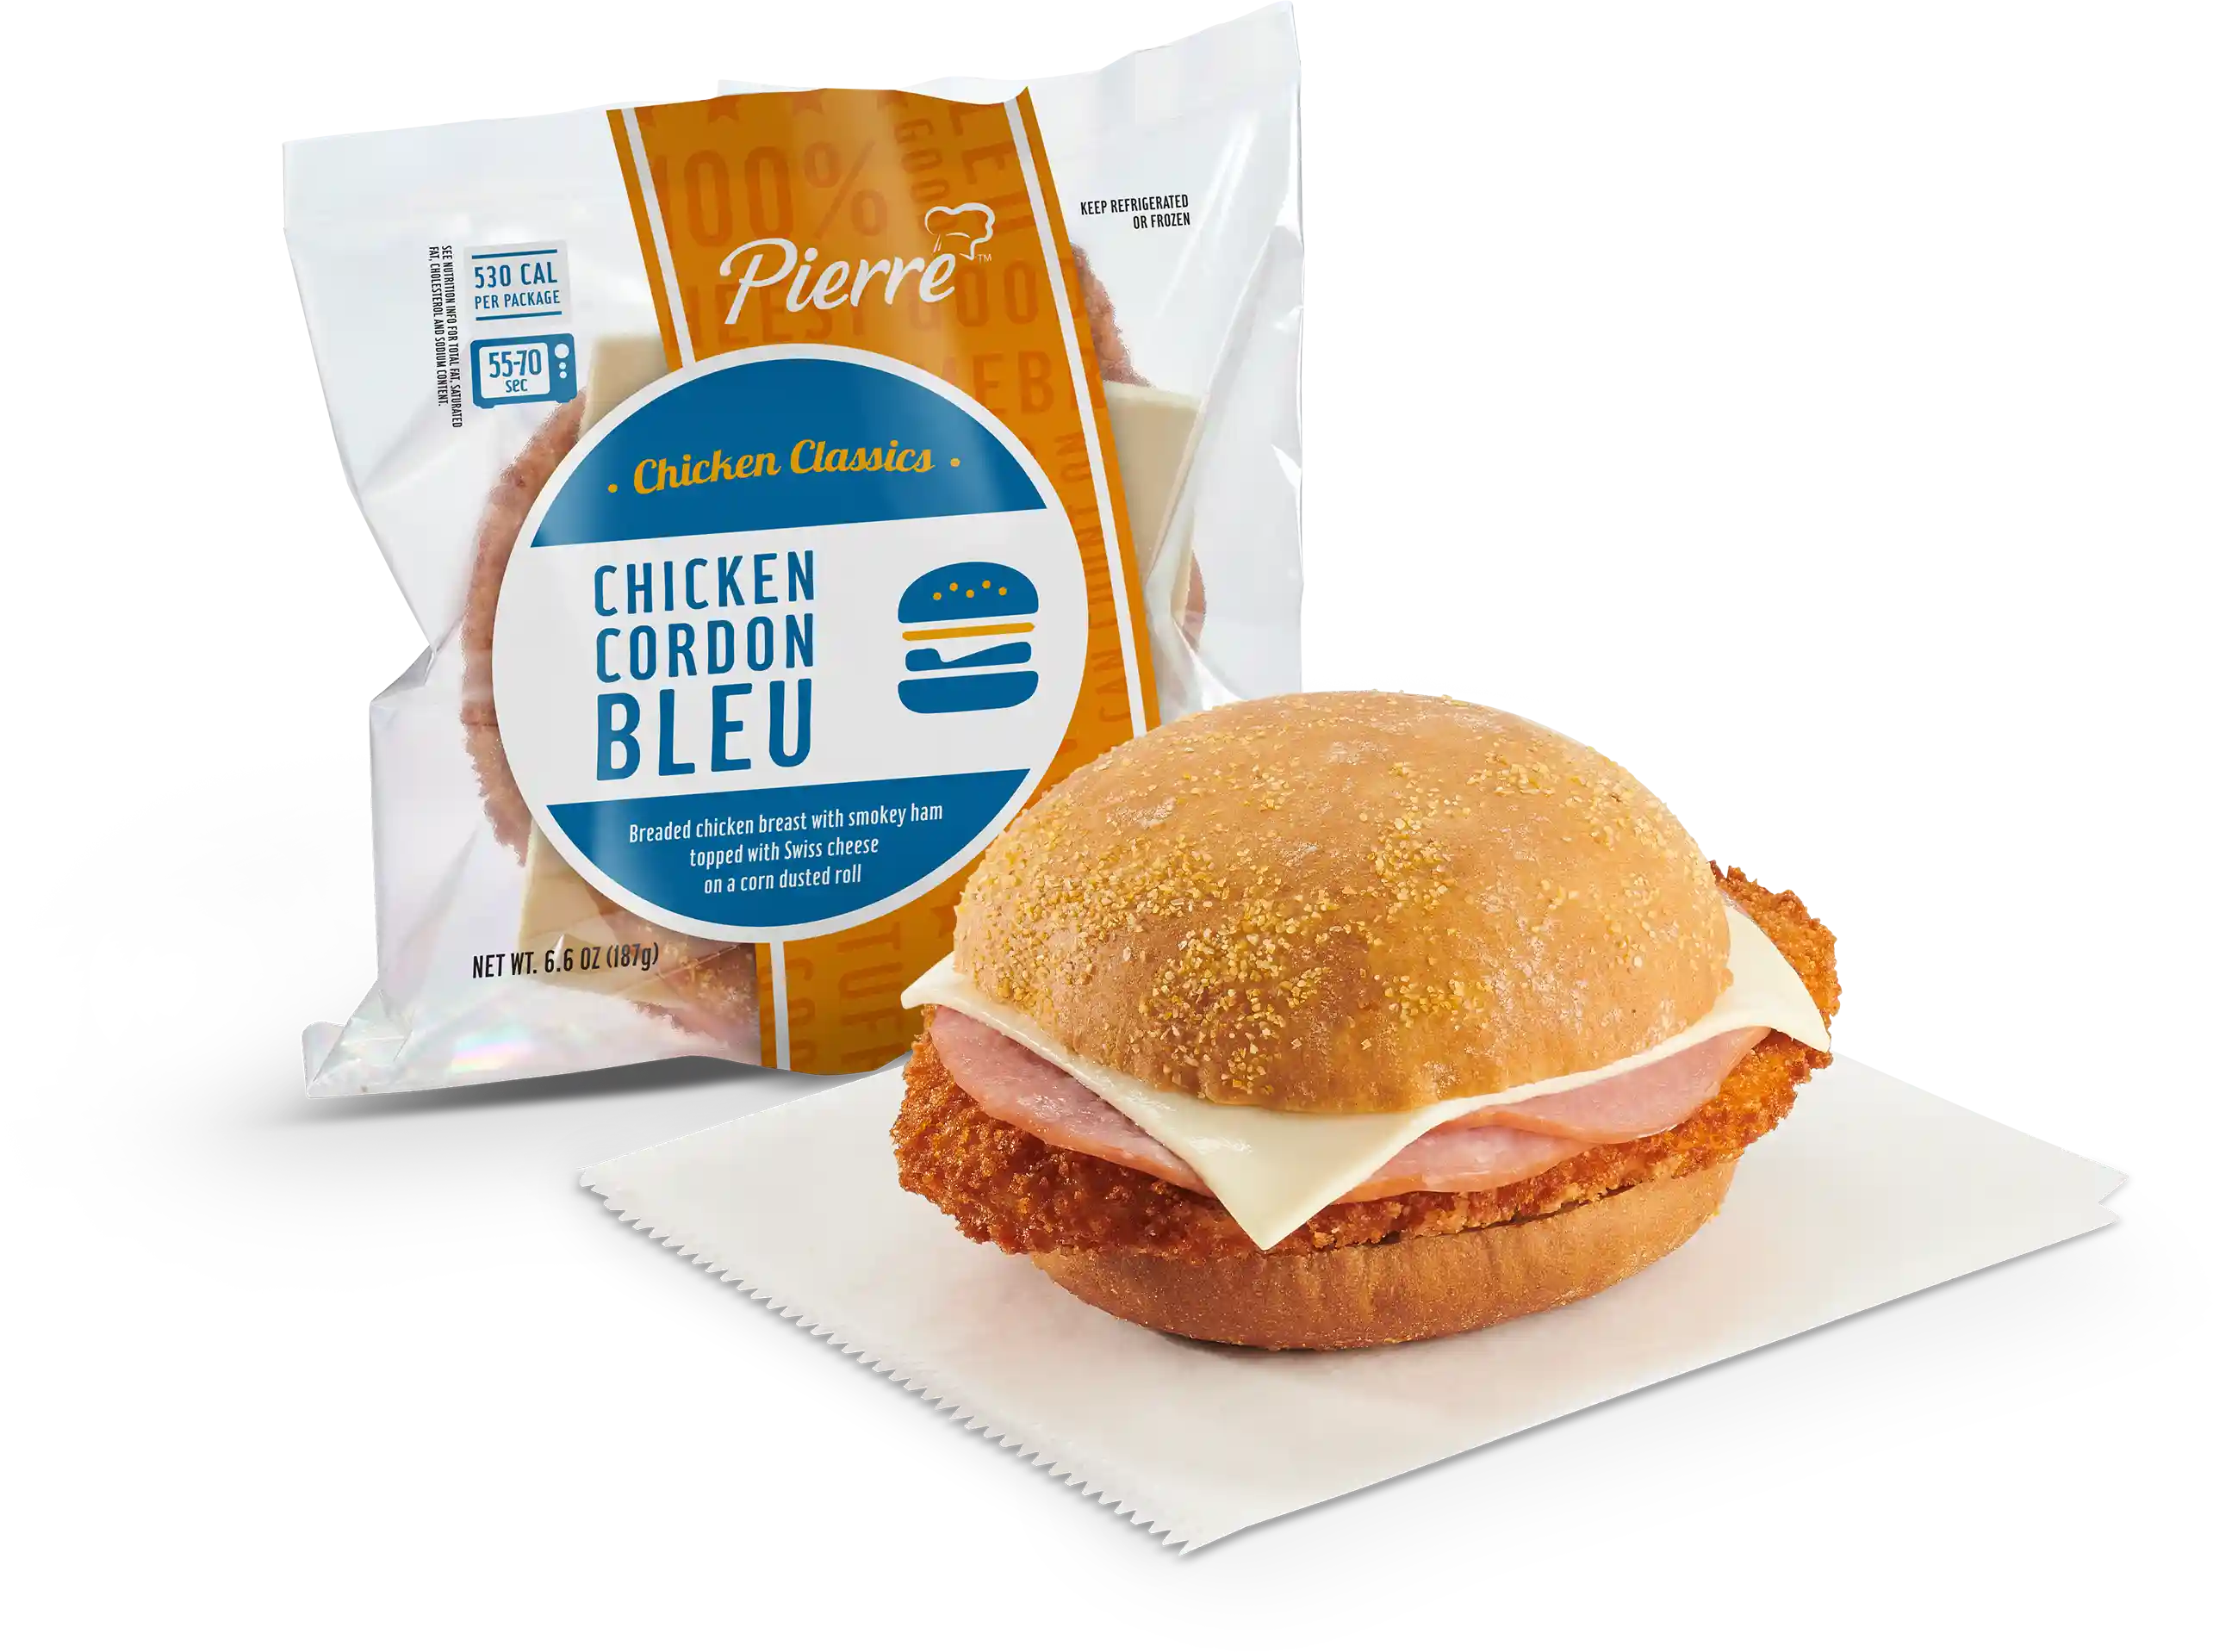 Pierre® Chicken Cordon Bleu, Ham and Cheese Sandwichhttps://images.salsify.com/image/upload/s--FRUPeHDF--/q_25/e2au38ineygfpkrabzhq.webp